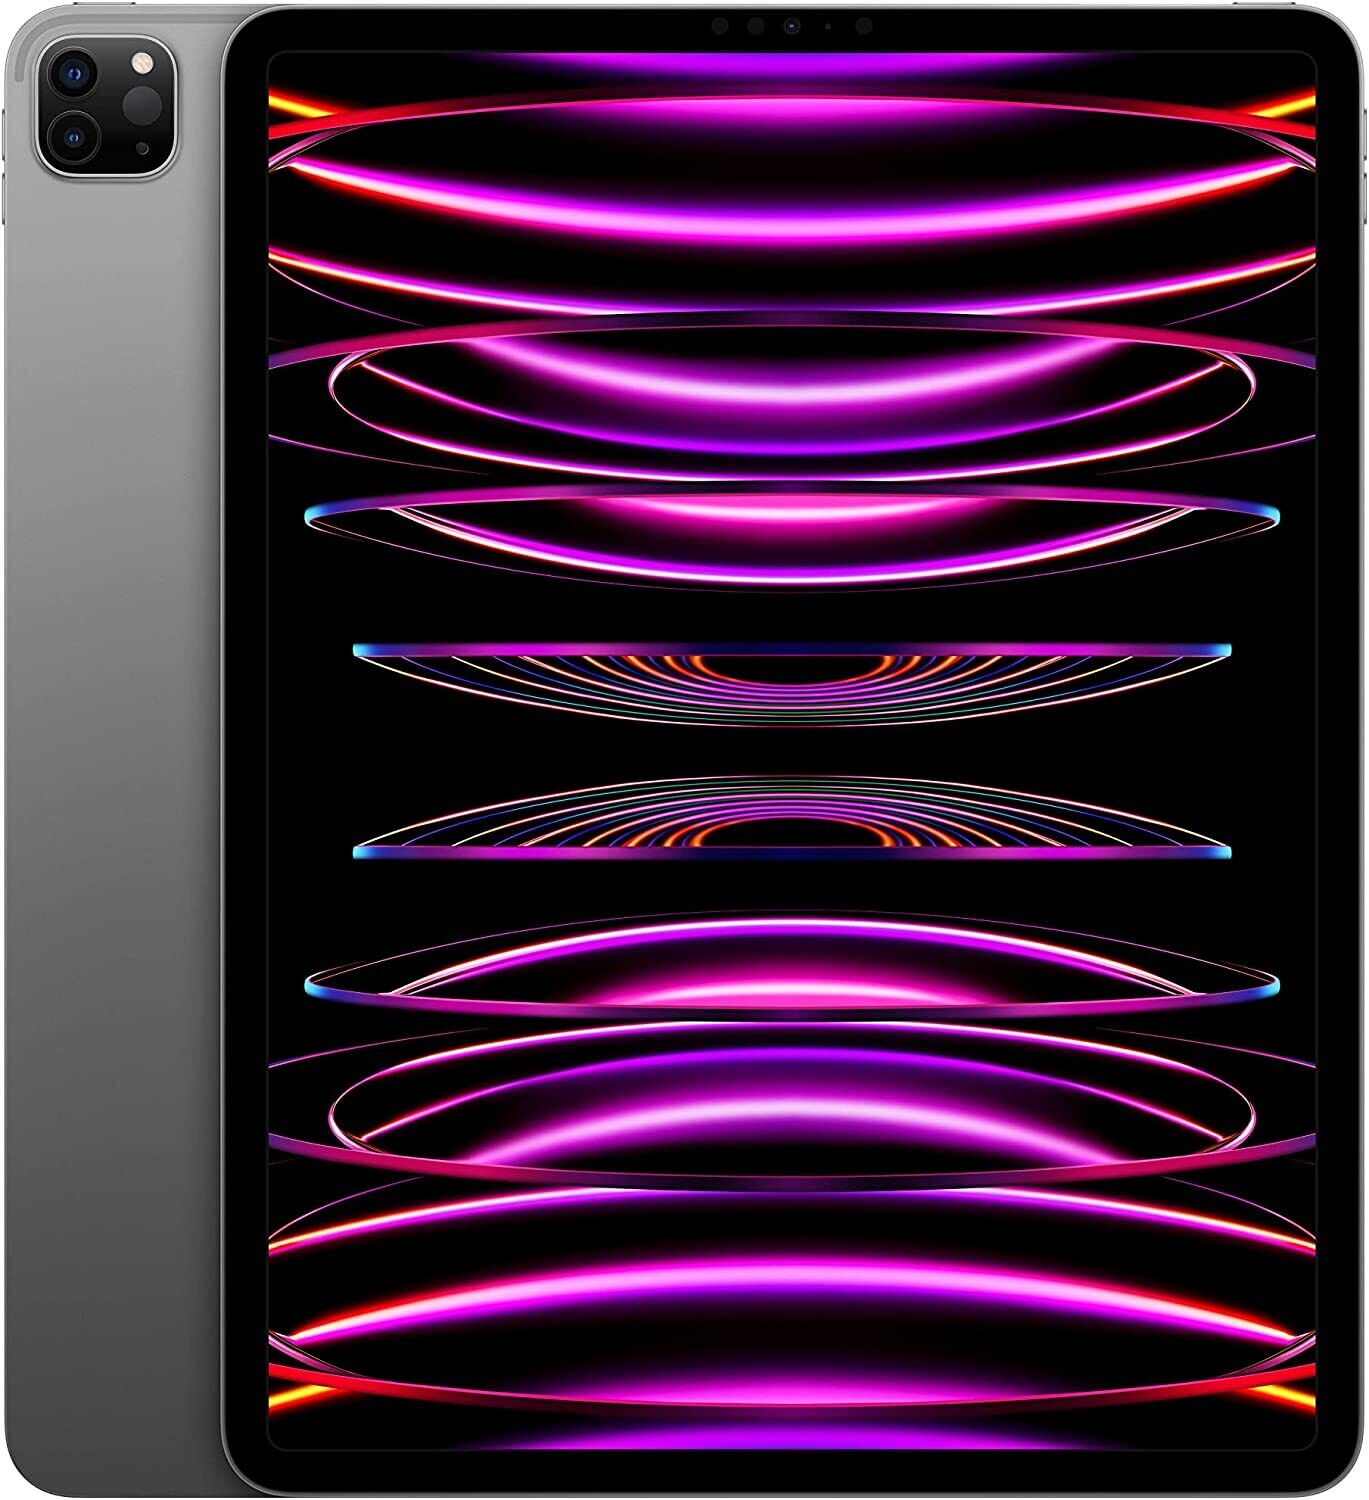 2022 Apple 11-inch iPad Pro (Wi-Fi + Cellular, 256GB) - Space Gray (4th Generation)